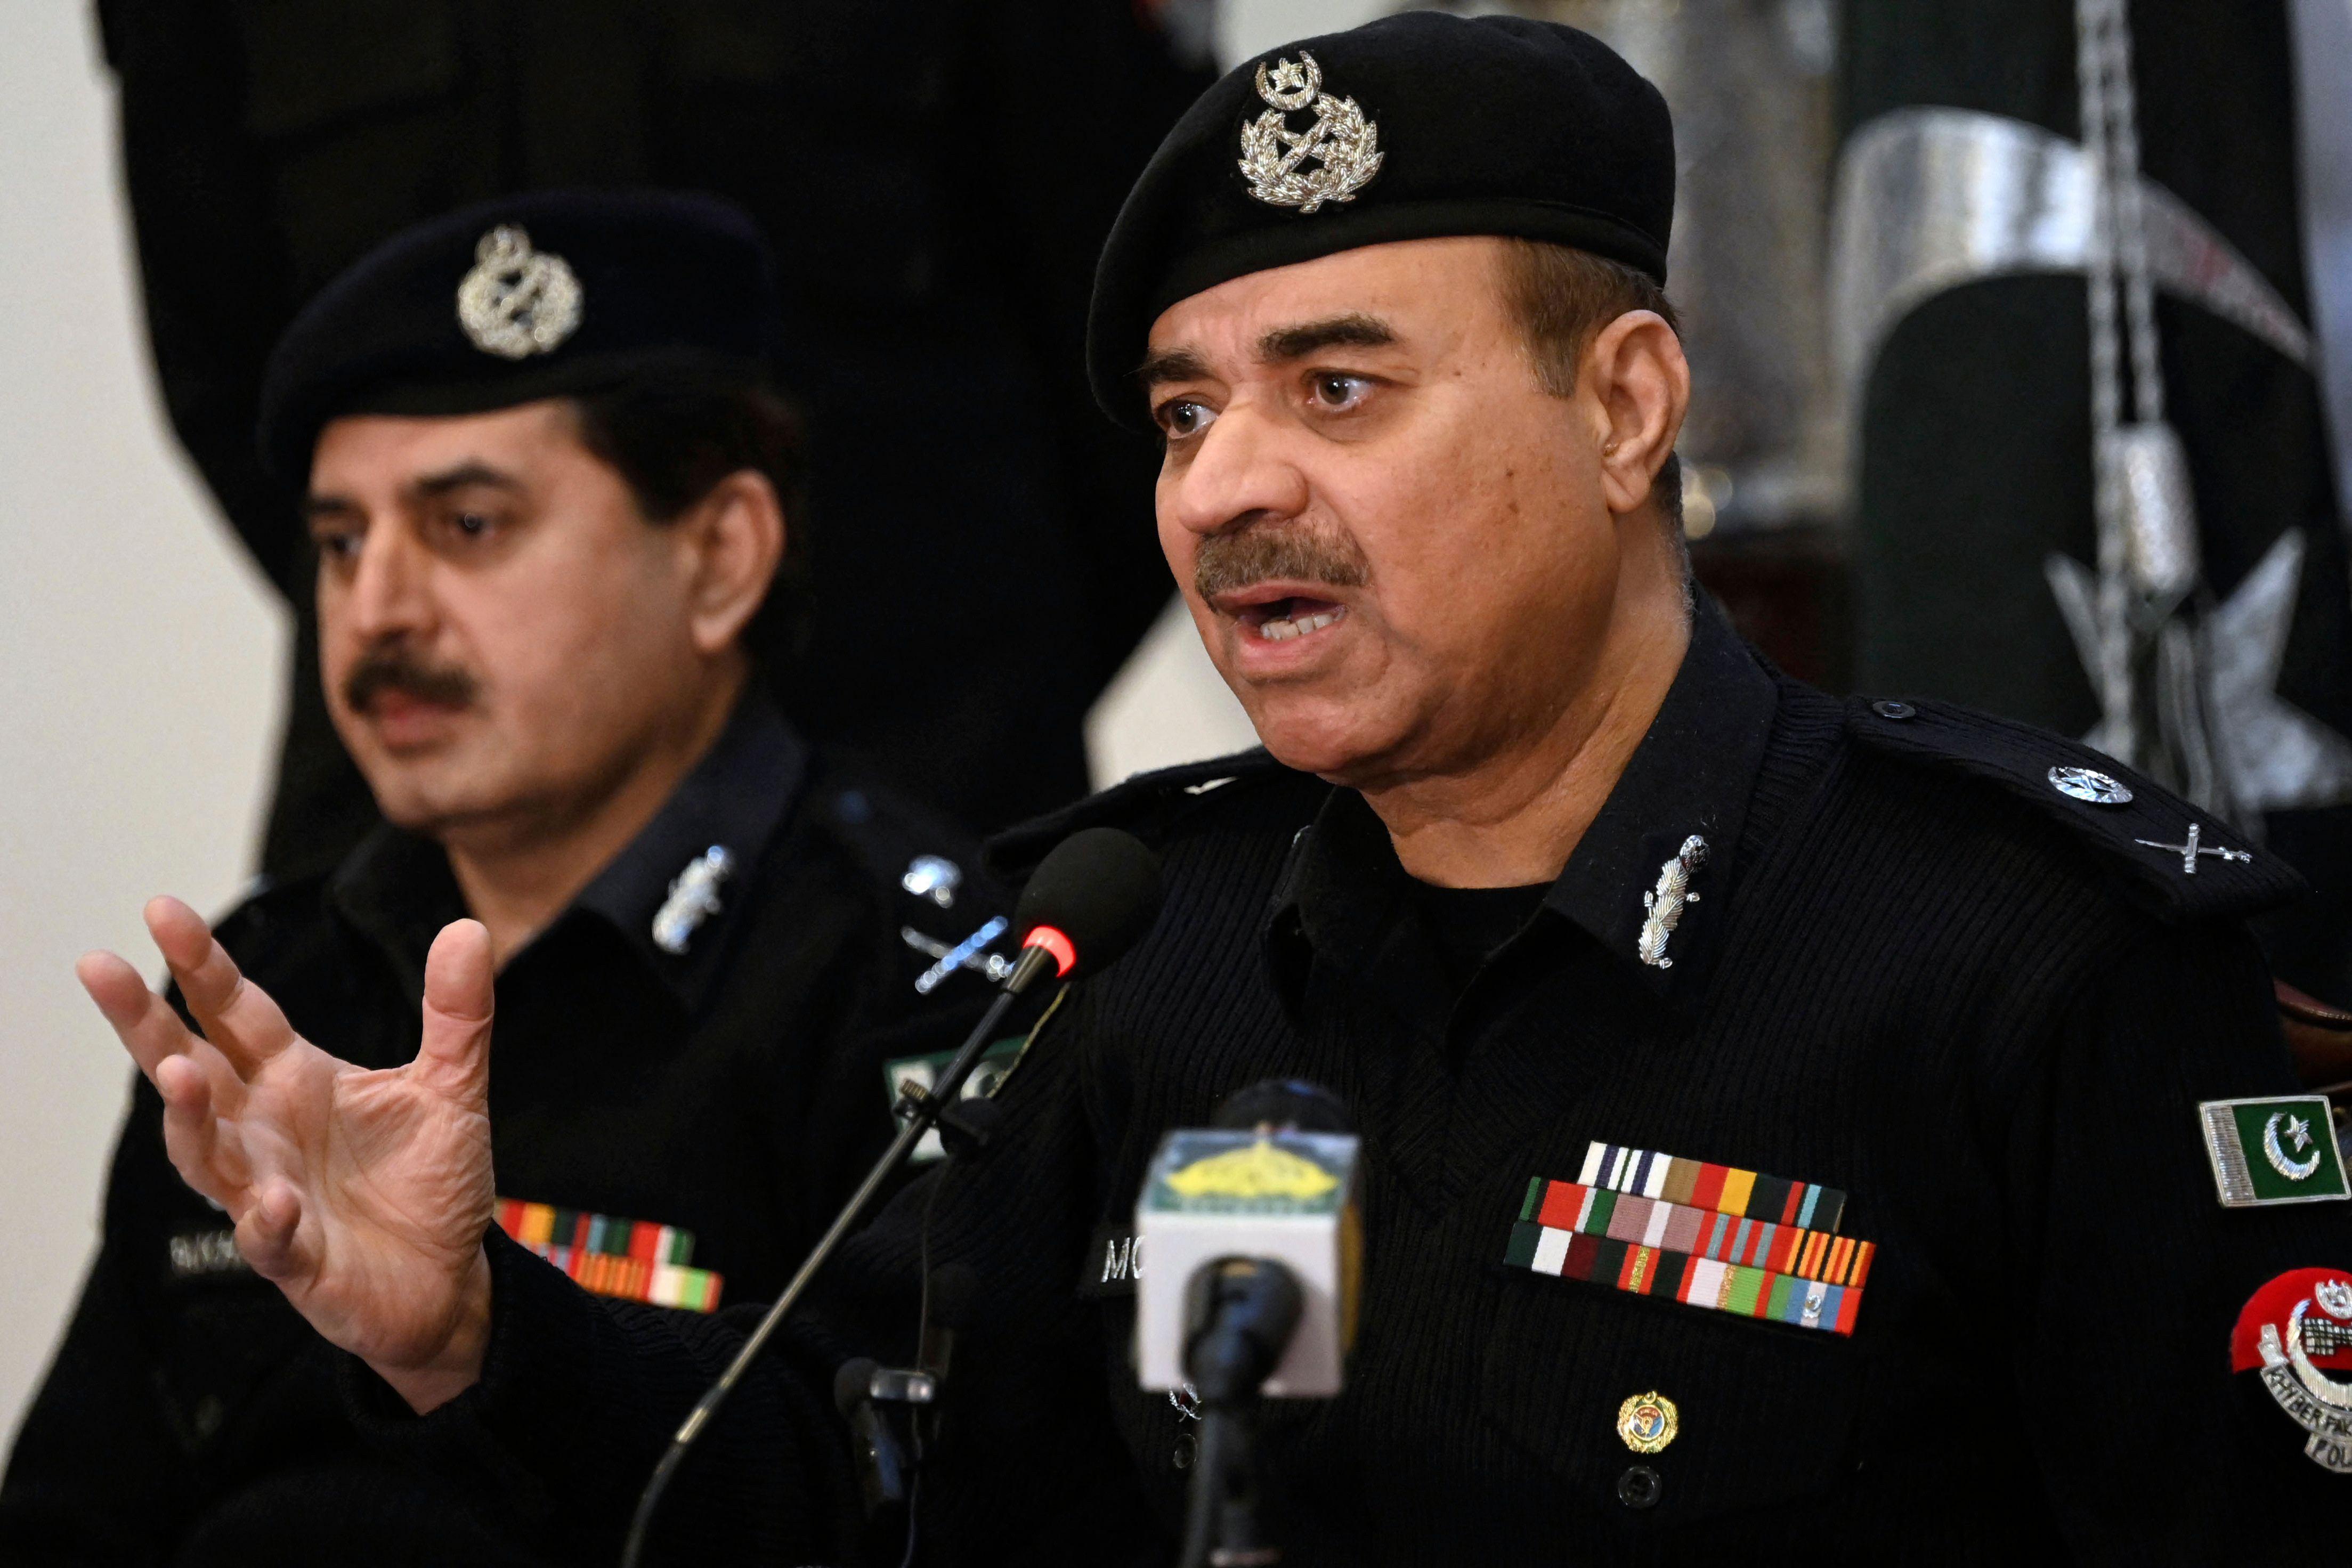 Peshawar mosque bomber identified, was in police unifom: IG K-P